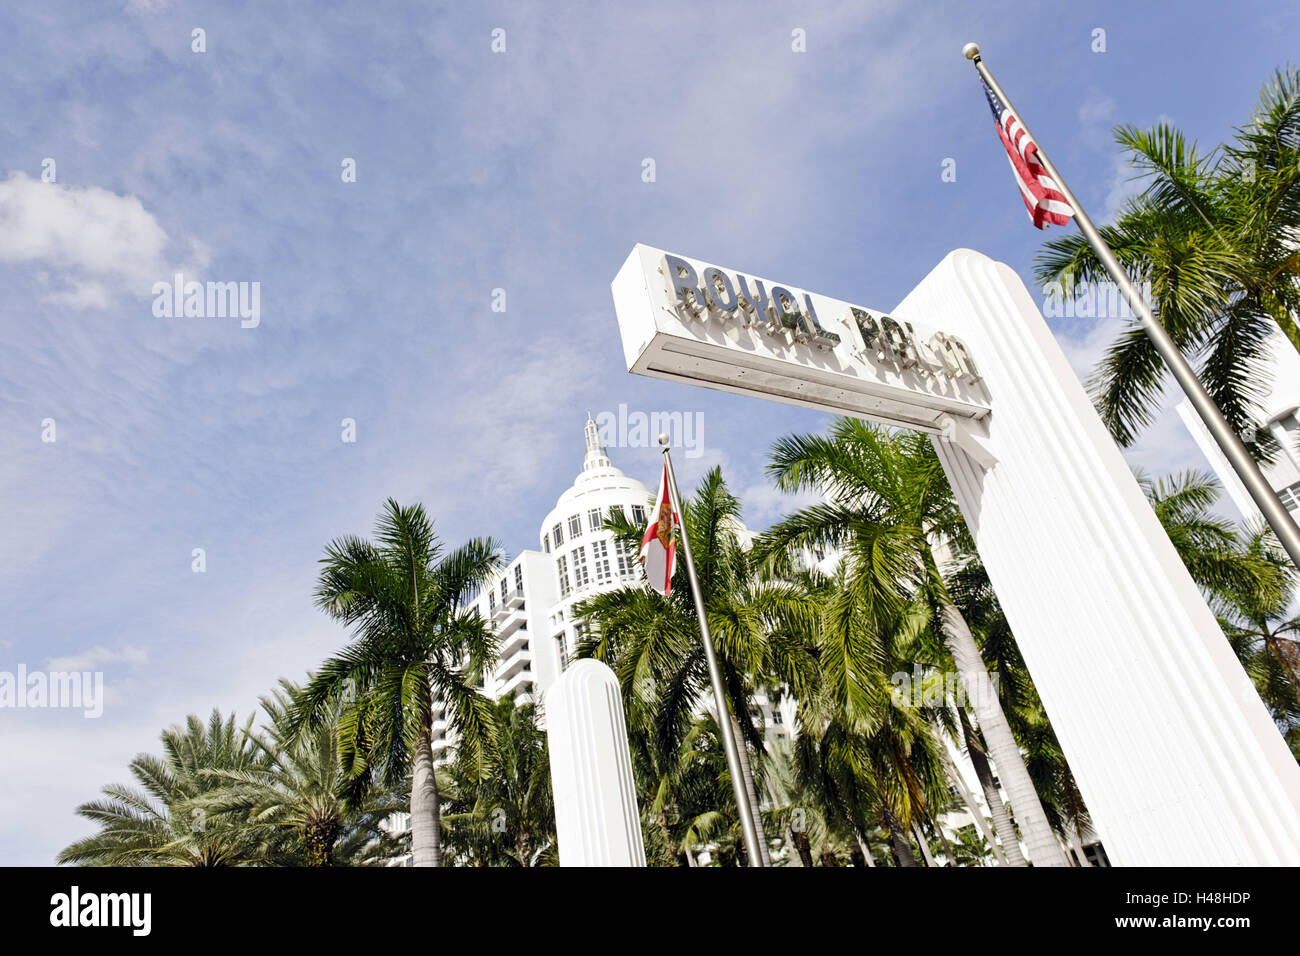 Collins Park Hotel Miami Beach FL - The Rinaldi Group Of Florida, LLC